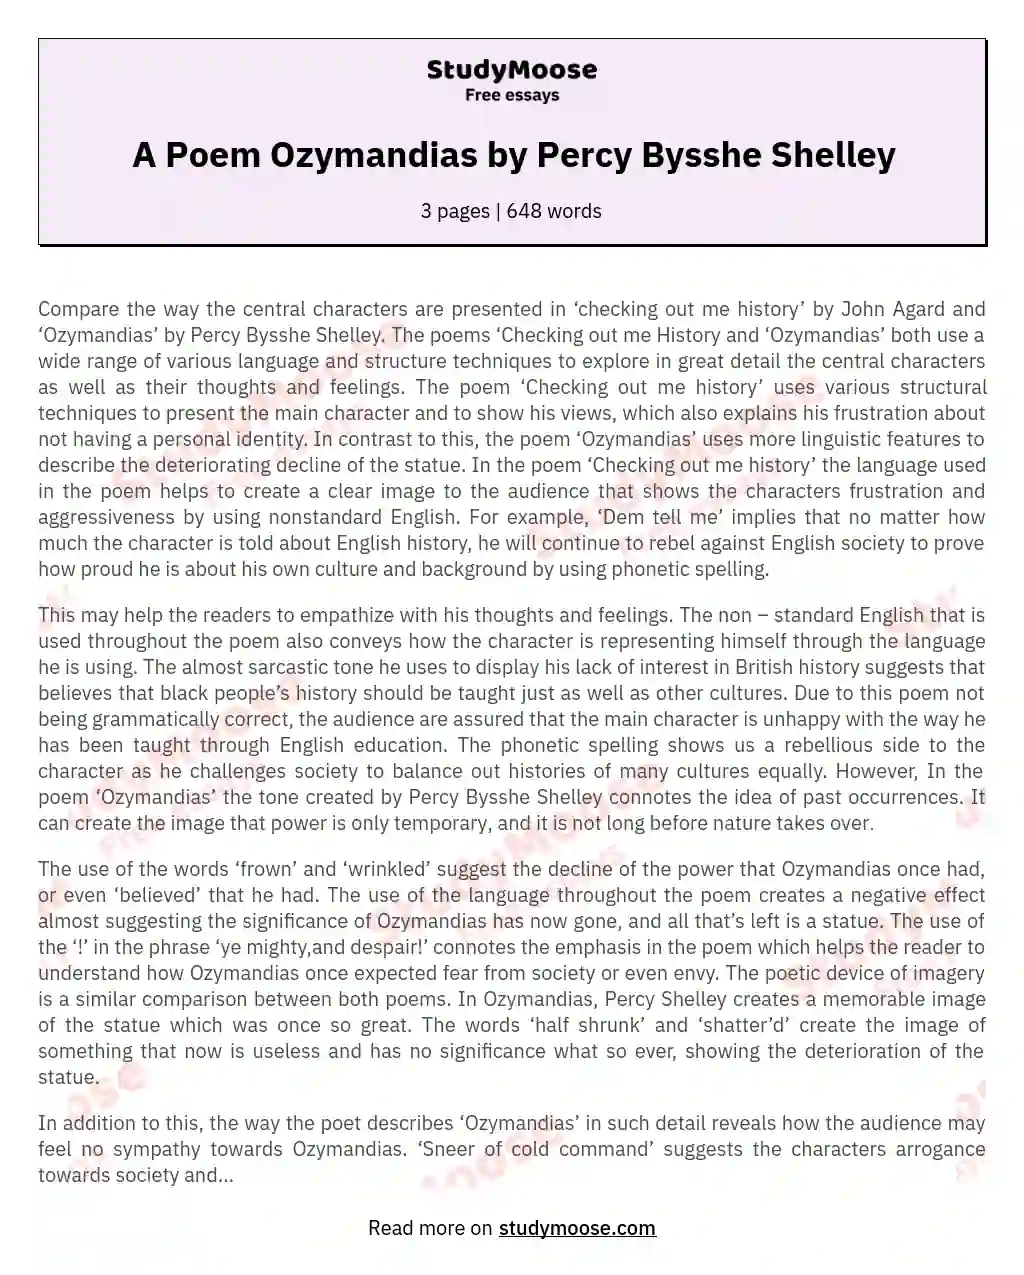 A Poem Ozymandias by Percy Bysshe Shelley